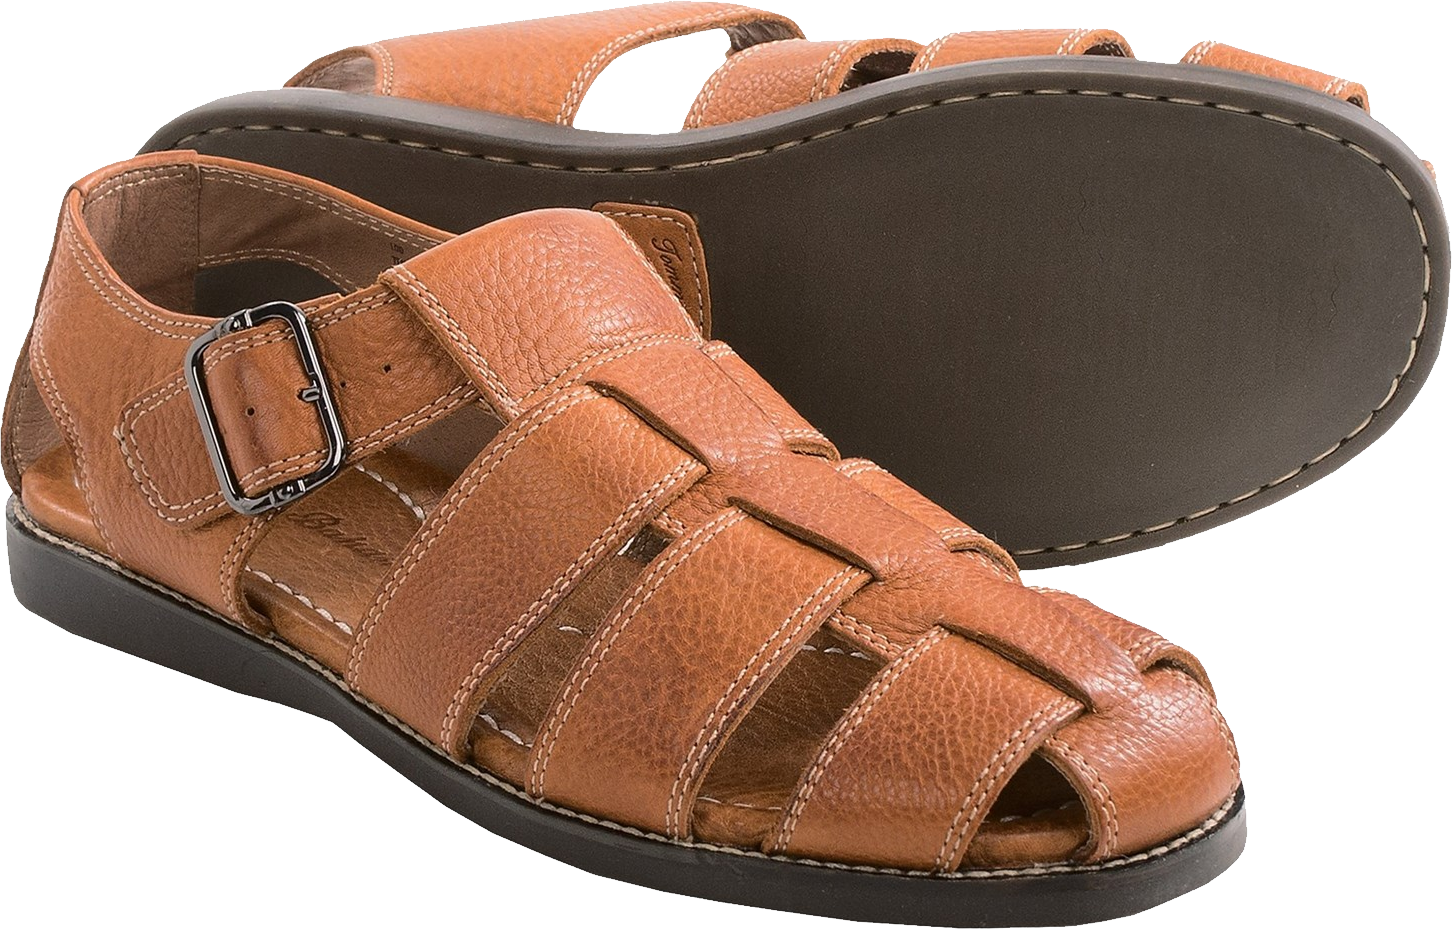 Leather Sandals Png Image - Sandals, Transparent background PNG HD thumbnail